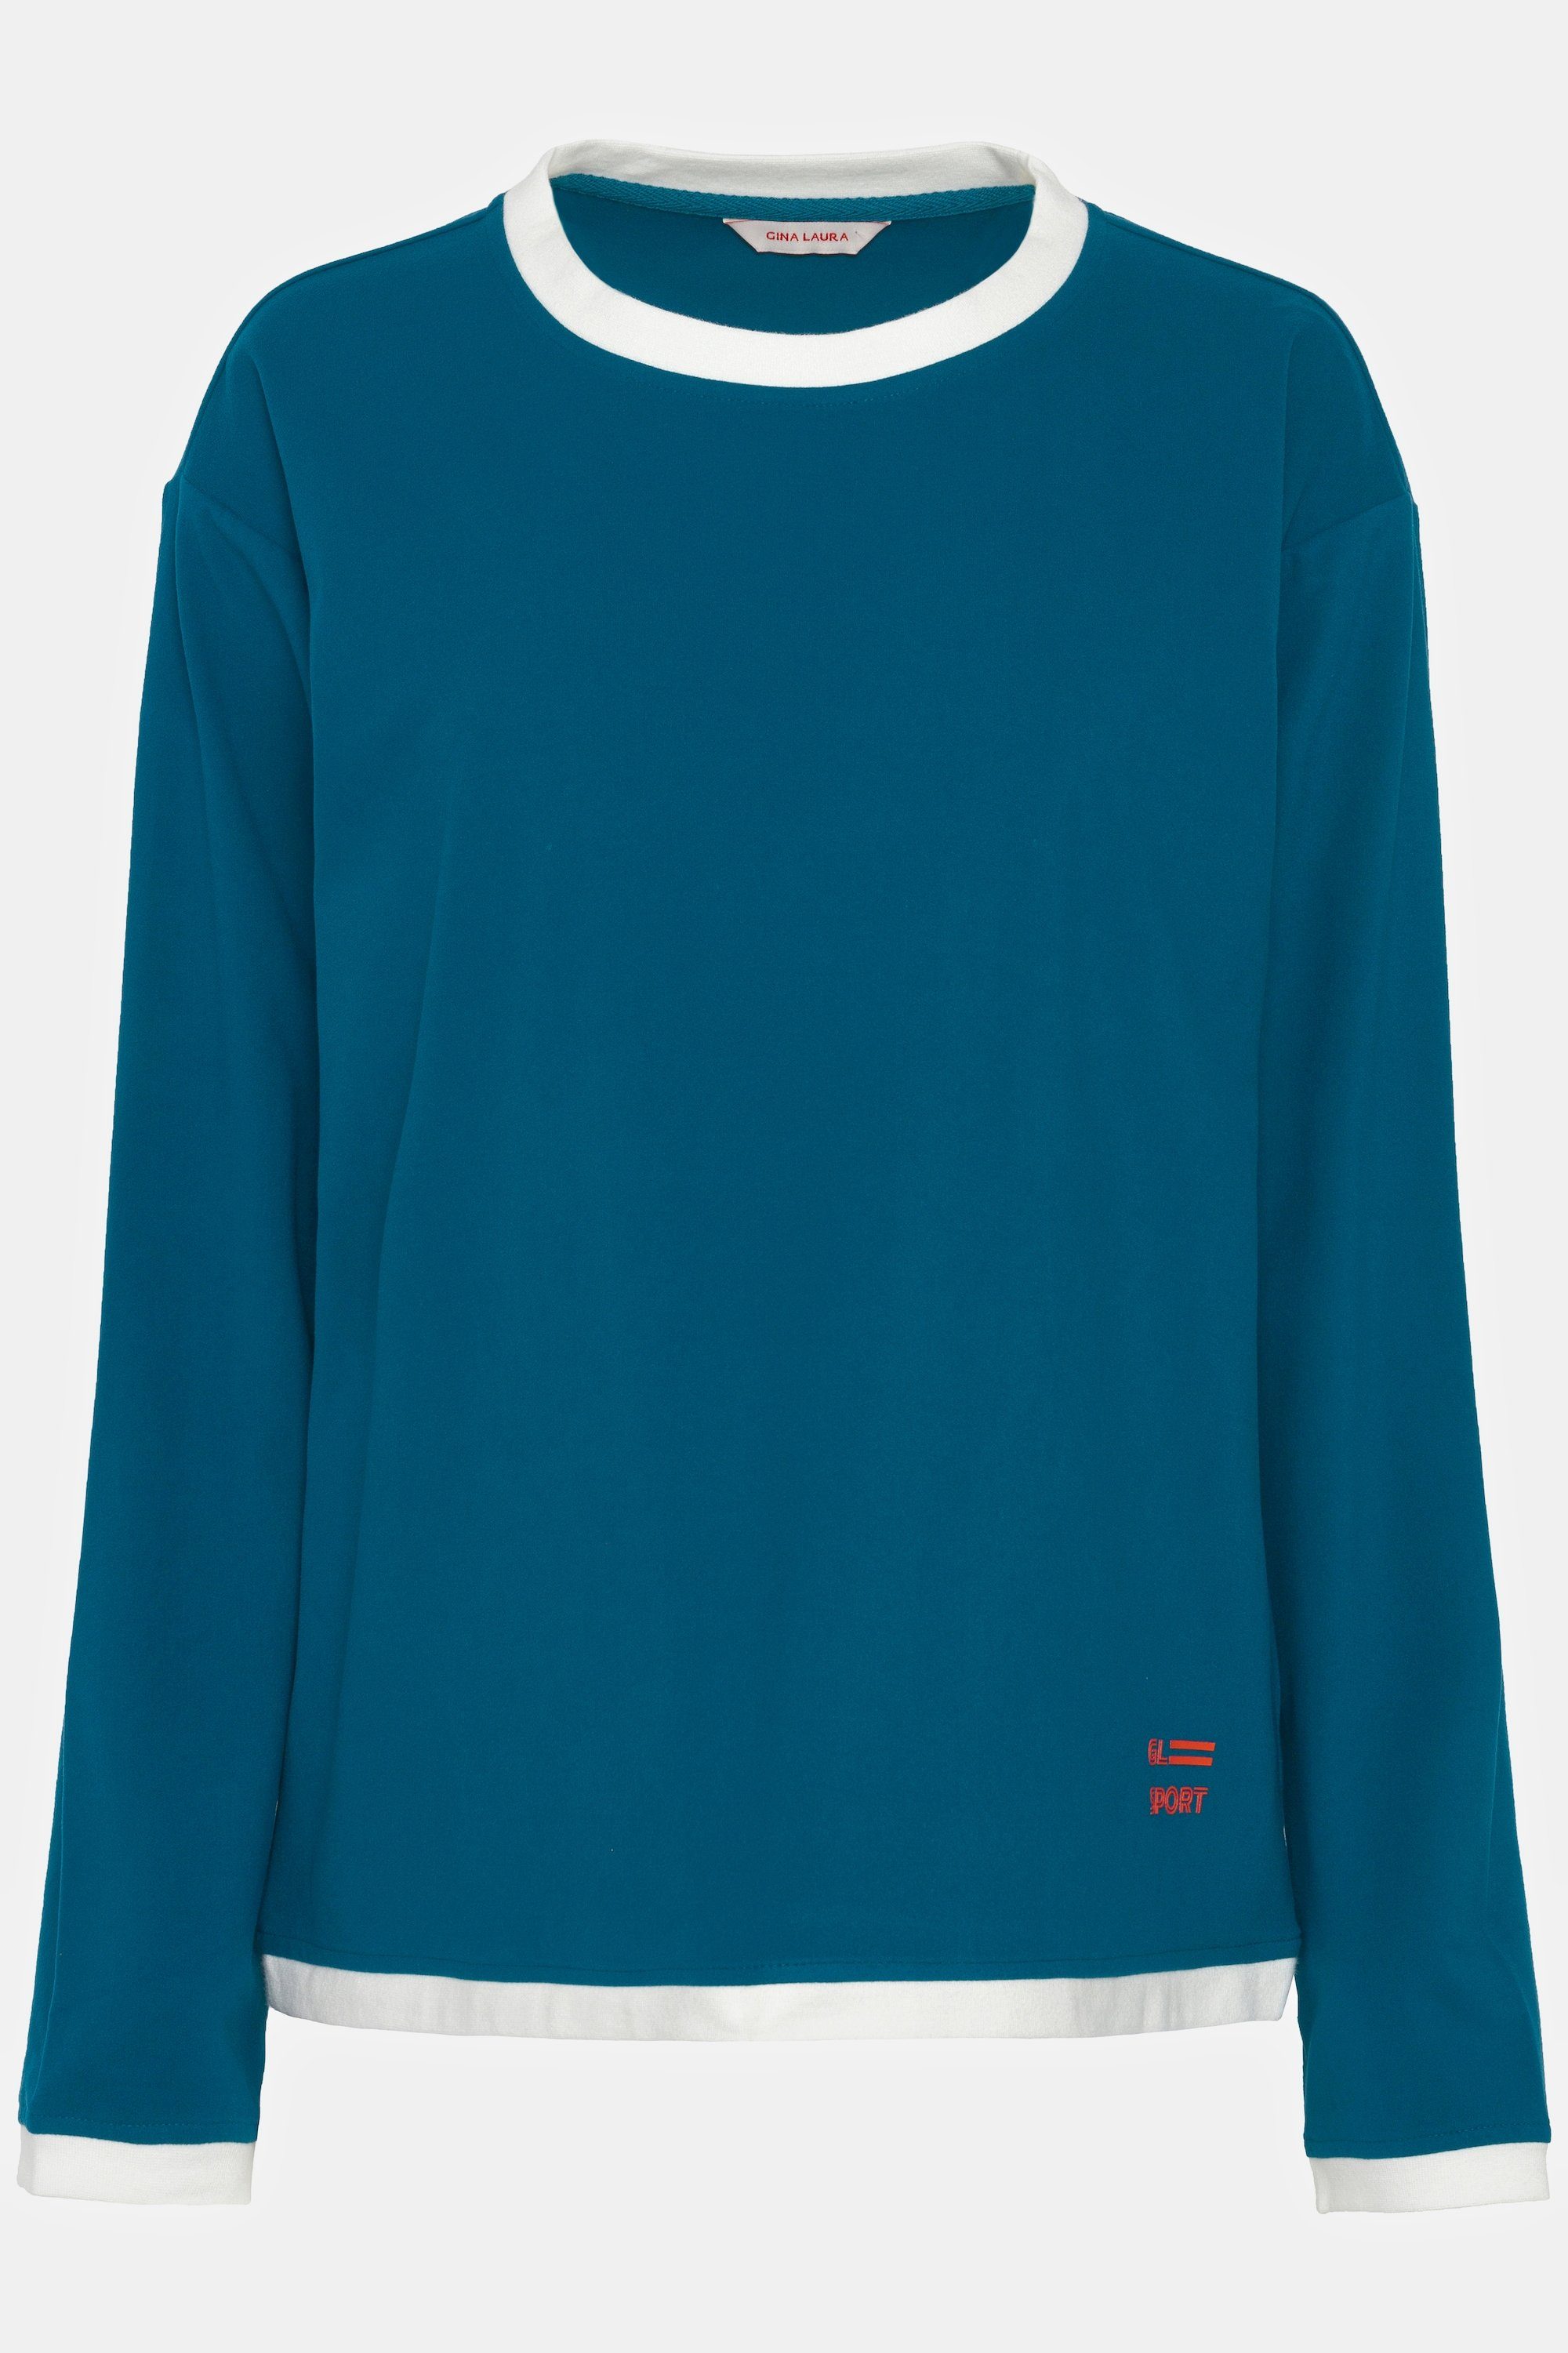 Rundhals Gina T-Shirt Laura Langarm Longshirt blaugrün Farb-Kontraste